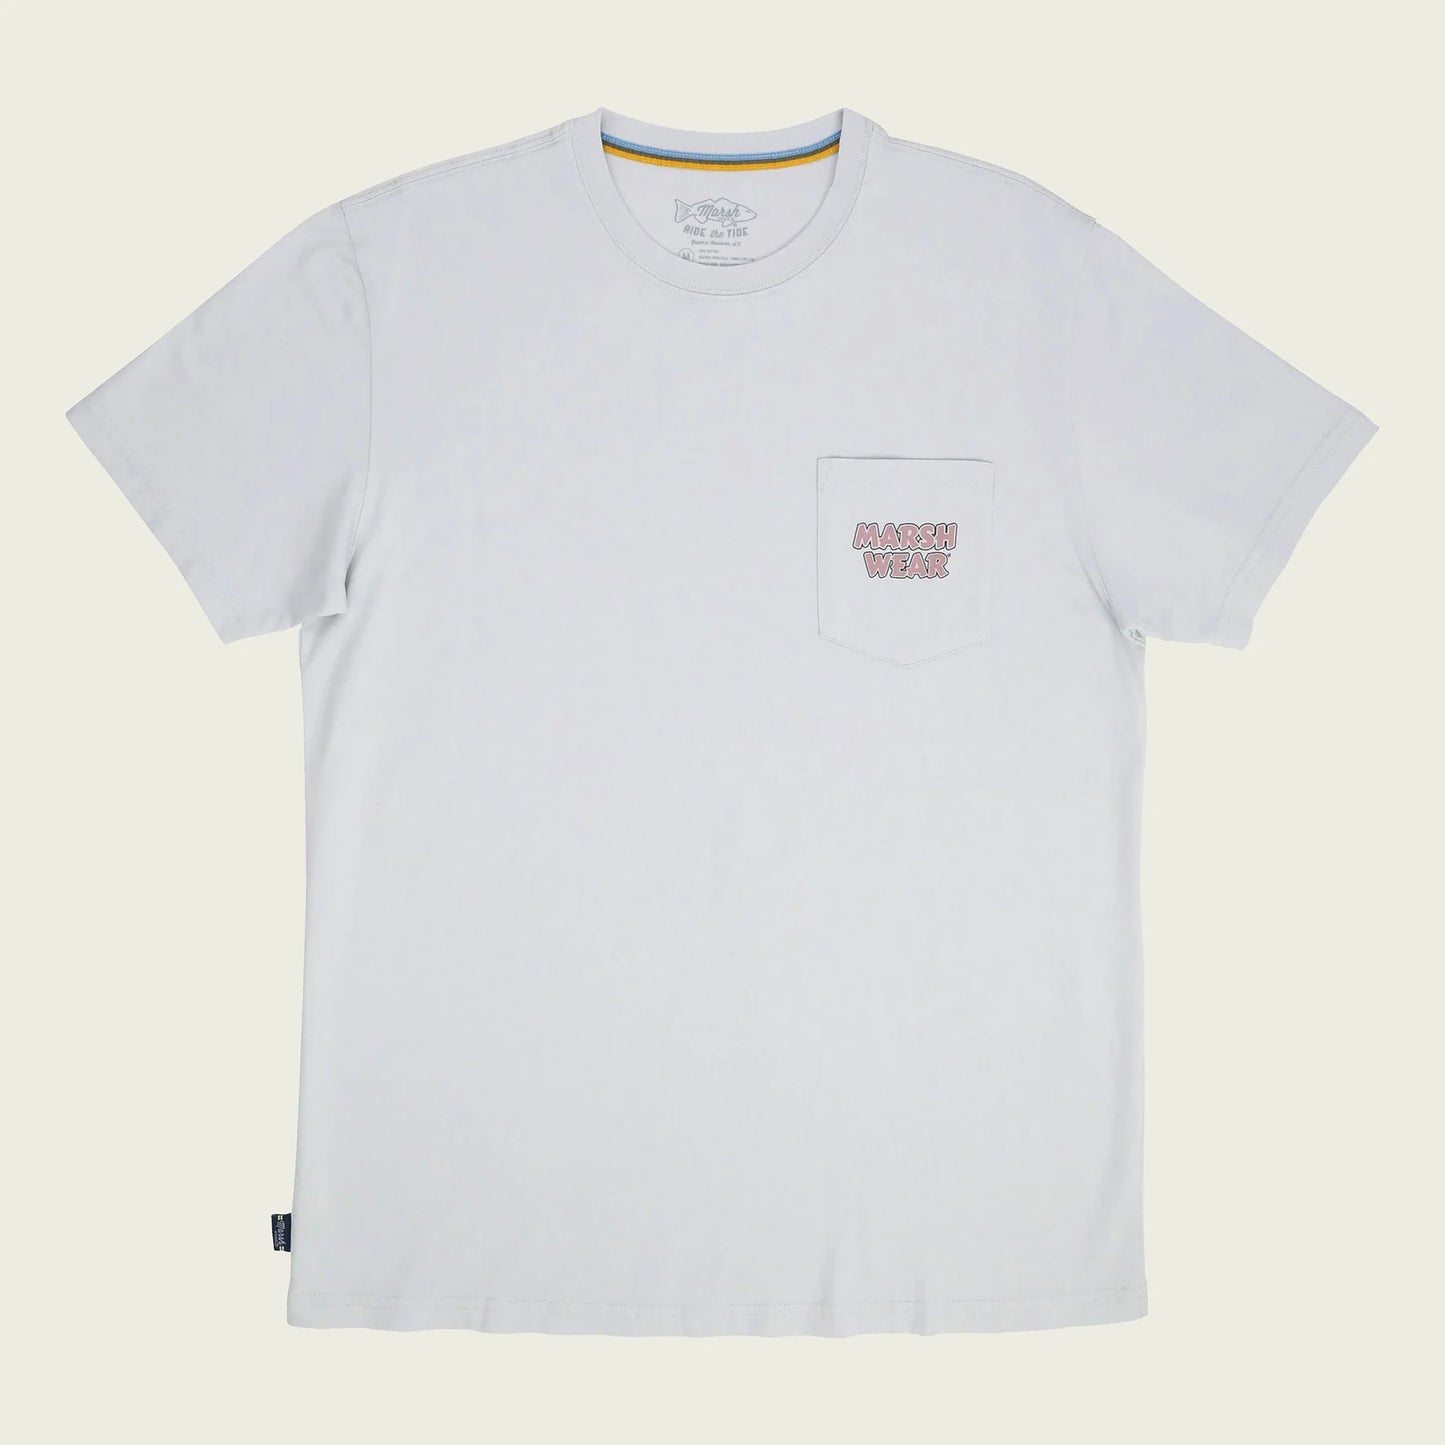 Marsh Wear Waterdog T-Shirt